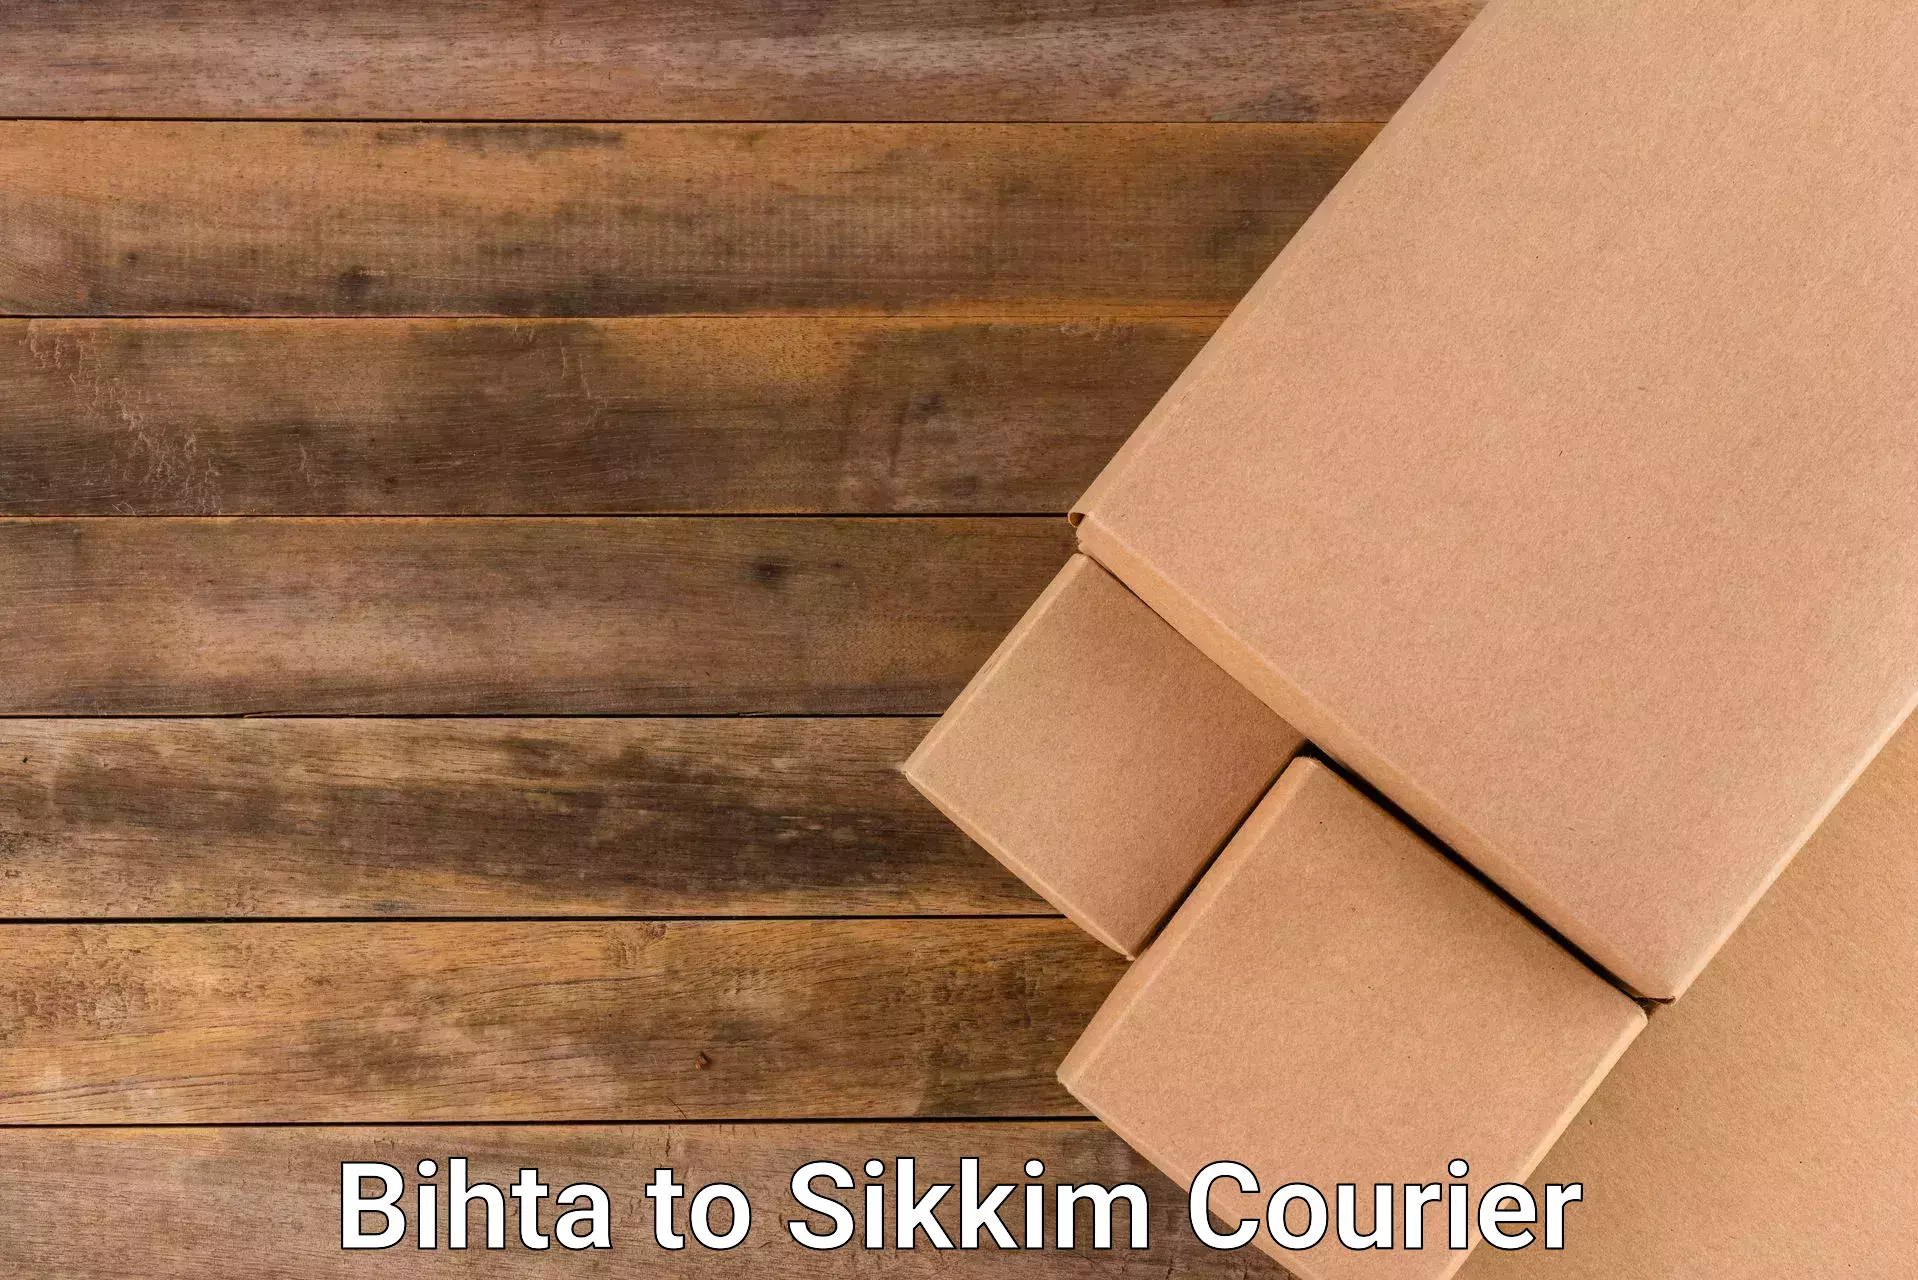 Ground shipping Bihta to West Sikkim